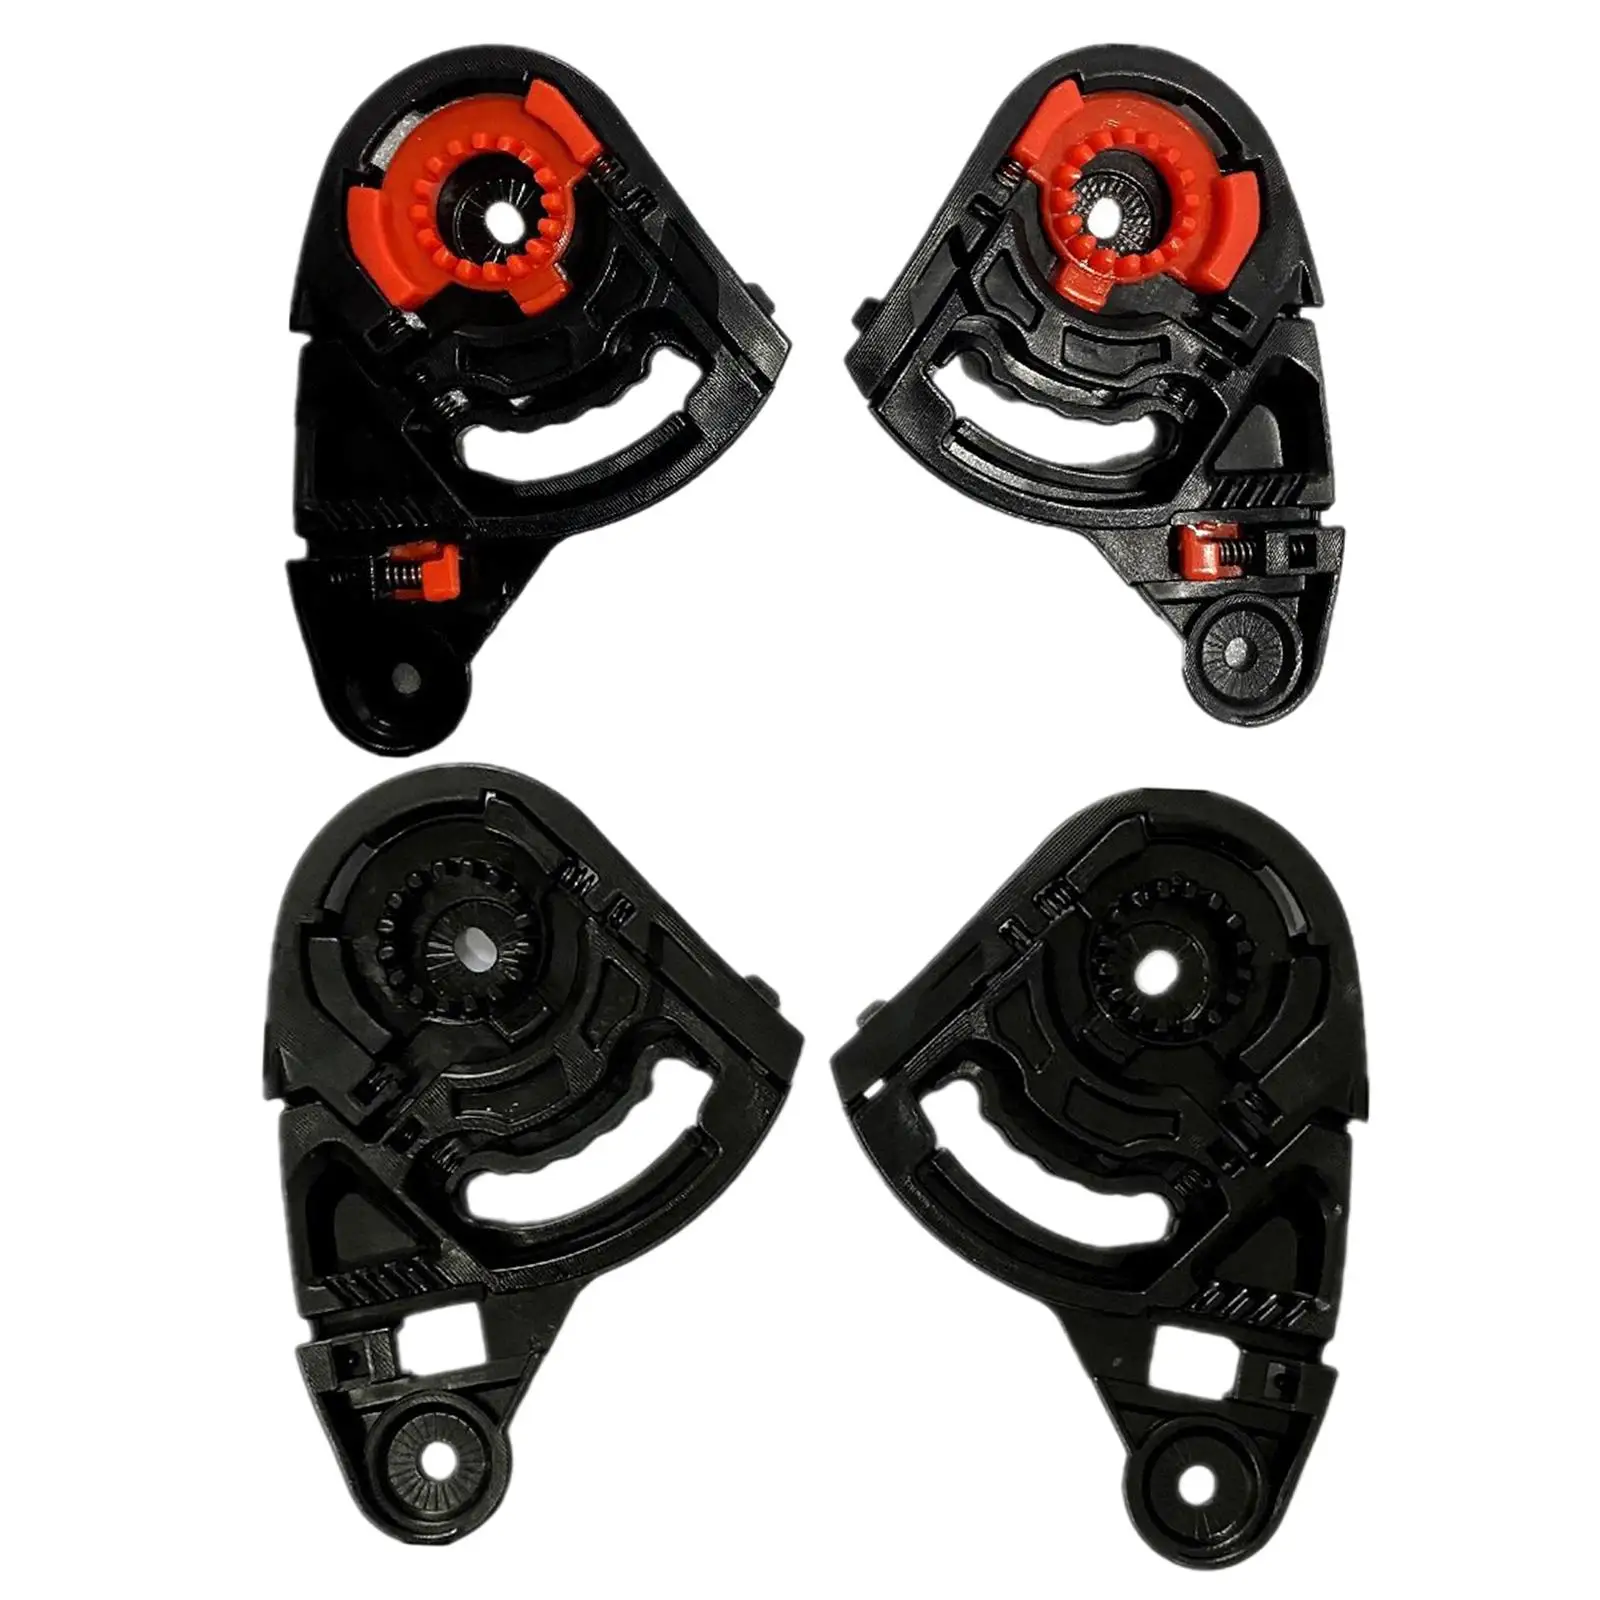 Helmet Gear Plate/Ratchet Set Shield Durable Practical Visor Gear Base Fit for MT Blade2 Revenge2 Rapide Motorcycle